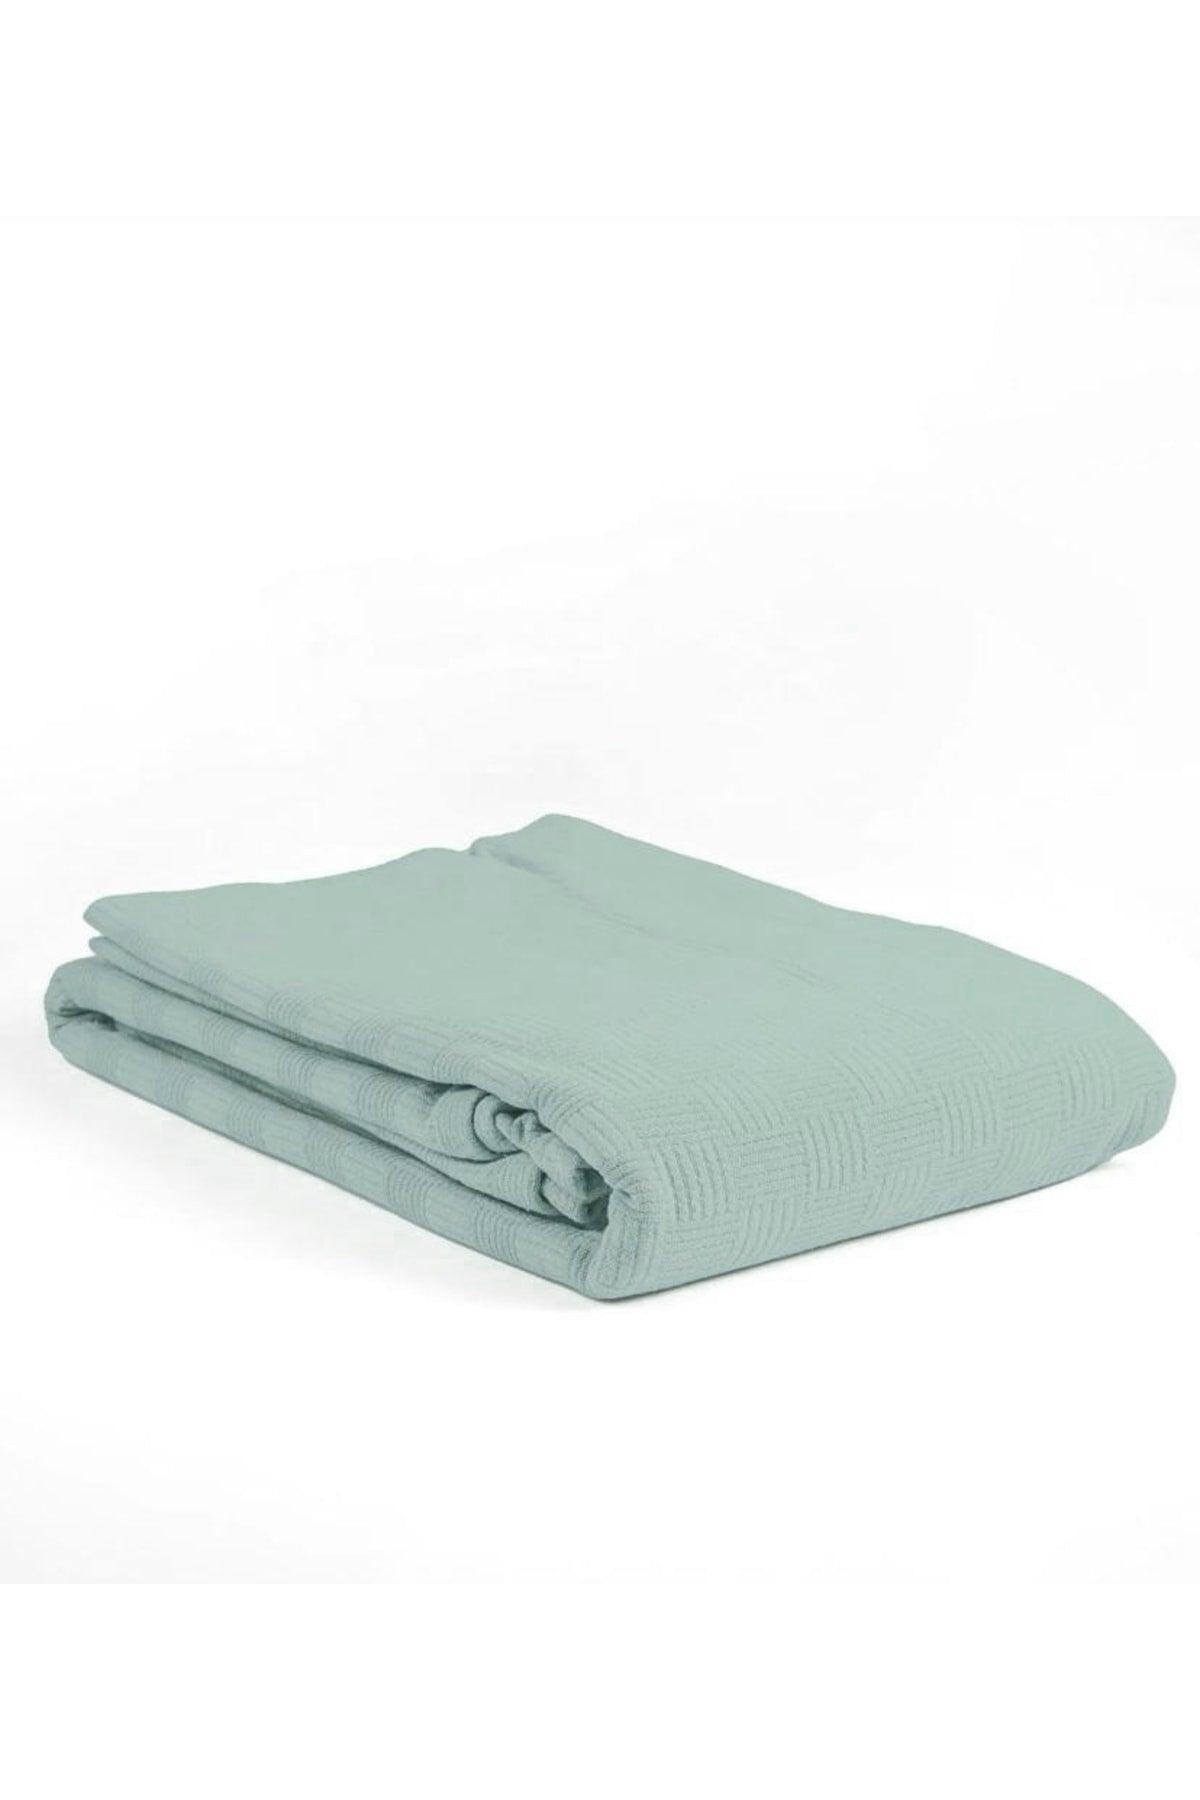 Checker Pattern Cotton Single Pique And Bedspread -Light Mint Green - Swordslife